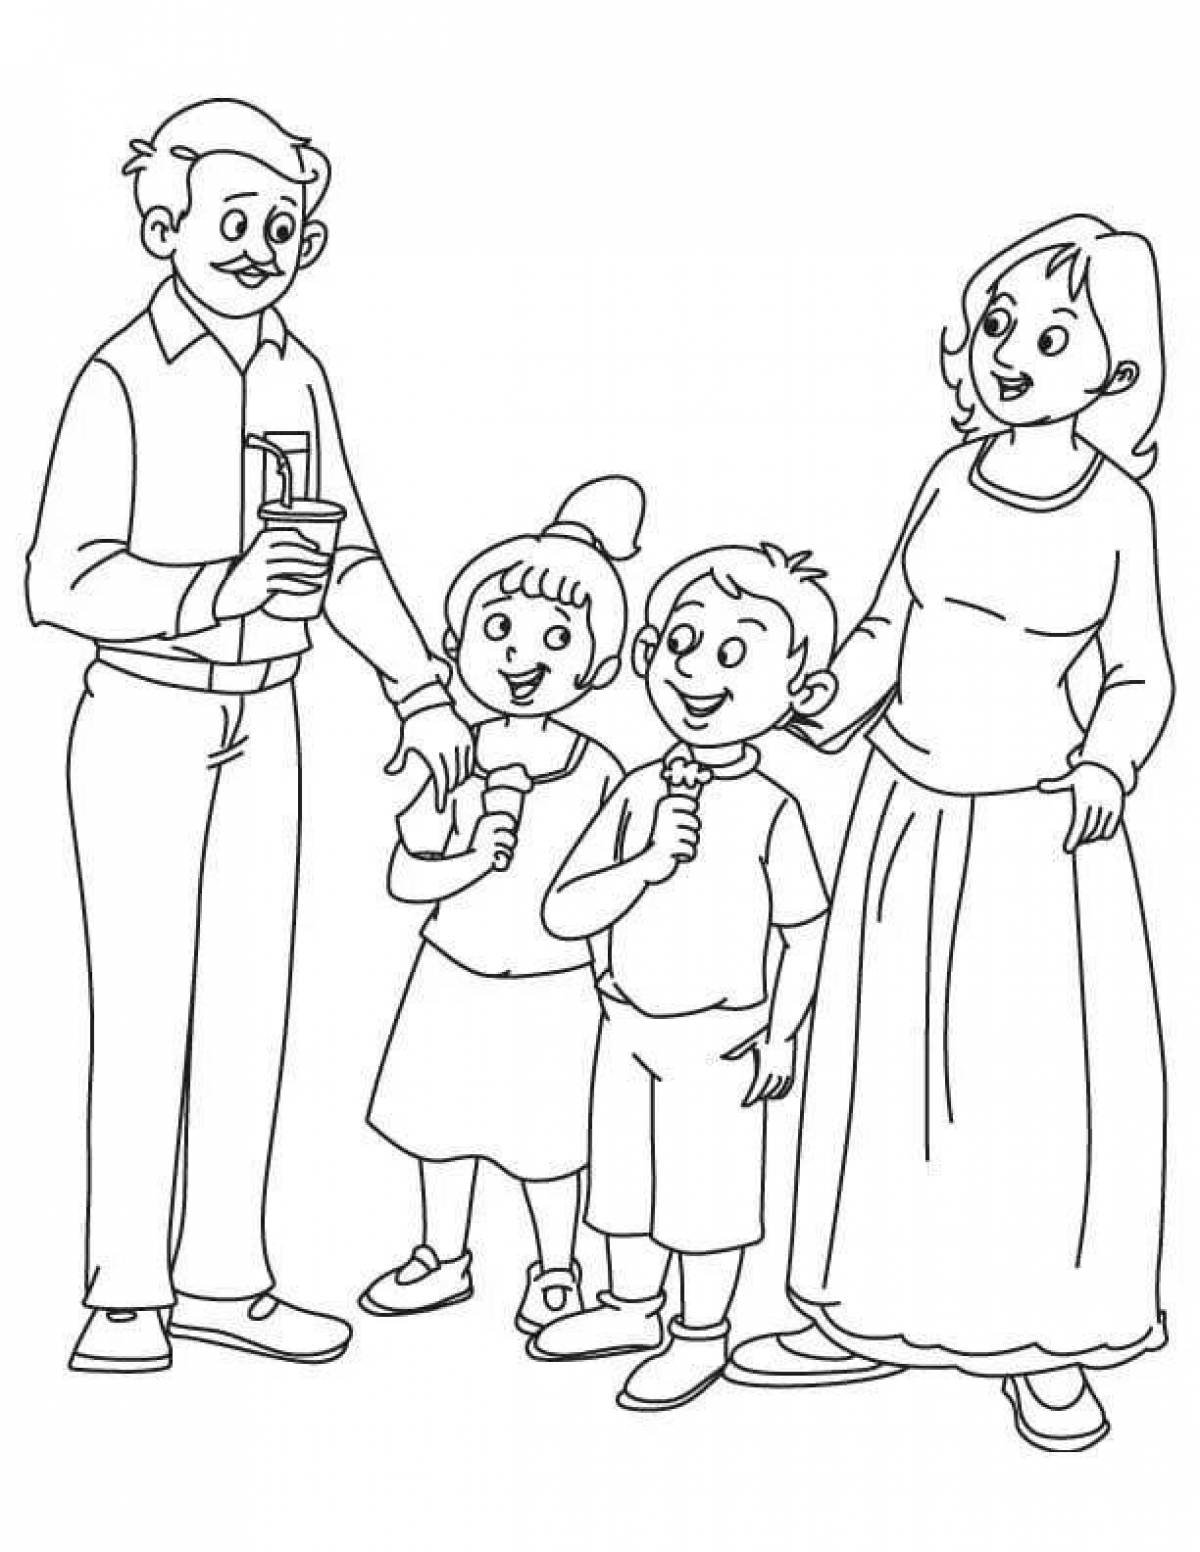 Раскраски семья для детей 6 7 лет. Раскраска семья. Раскраска "моя семья". Семья раскраска для детей. Папа раскраска для детей.